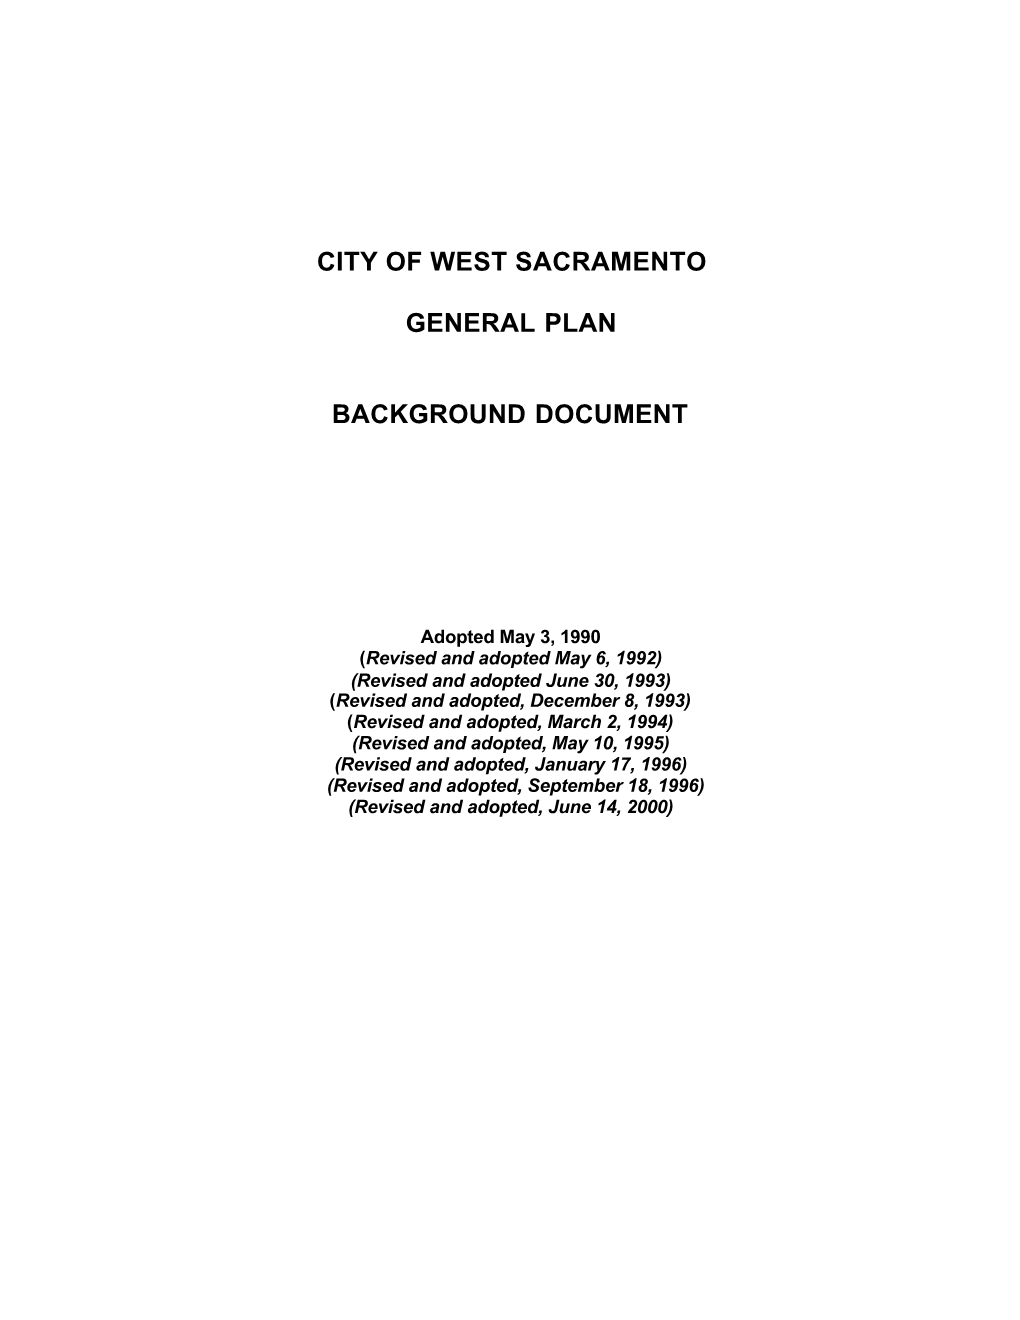 City of West Sacramento General Plan Background Document